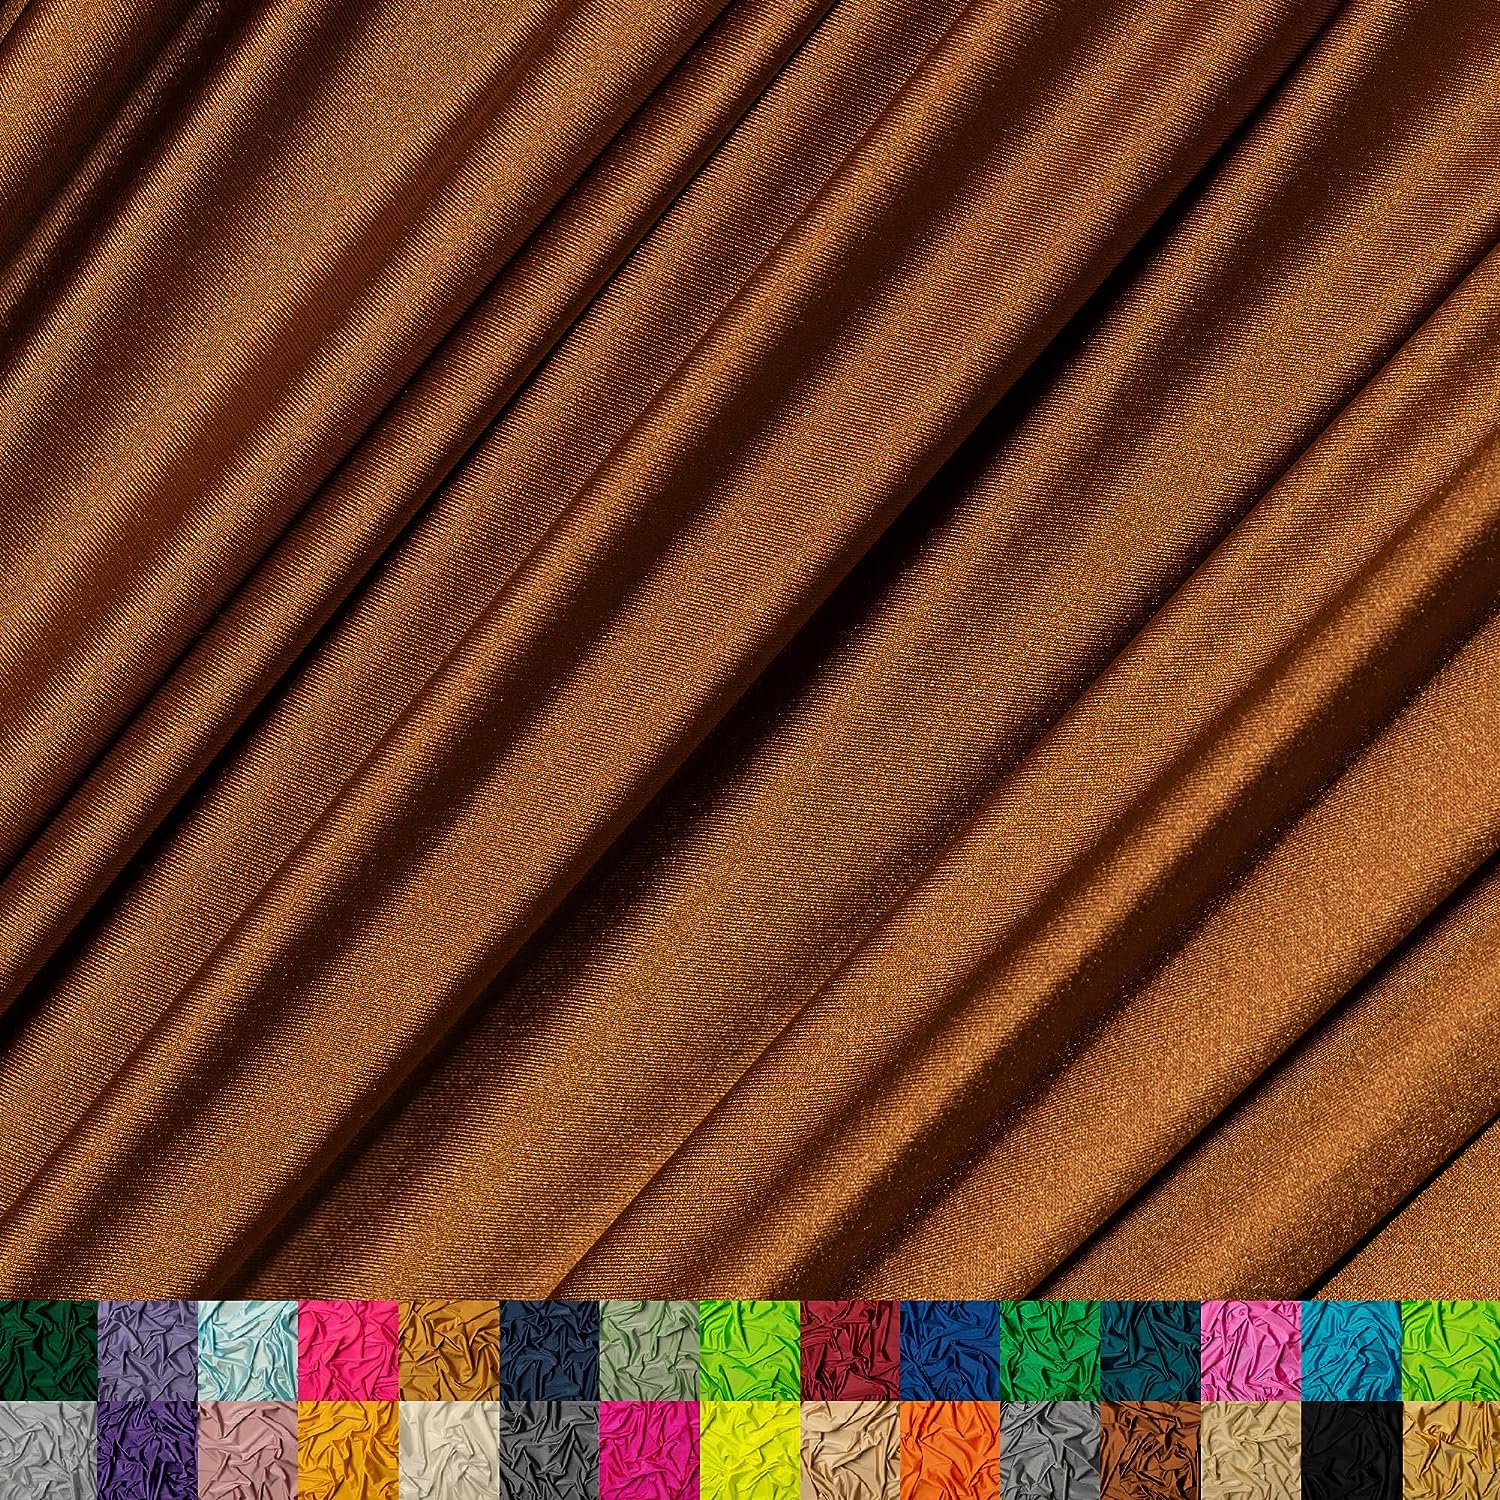  ITY Fabric Polyester Lycra Knit Jersey 2 Way Spandex Stretch  58 Wide by The Yard (1 Yard, Black)